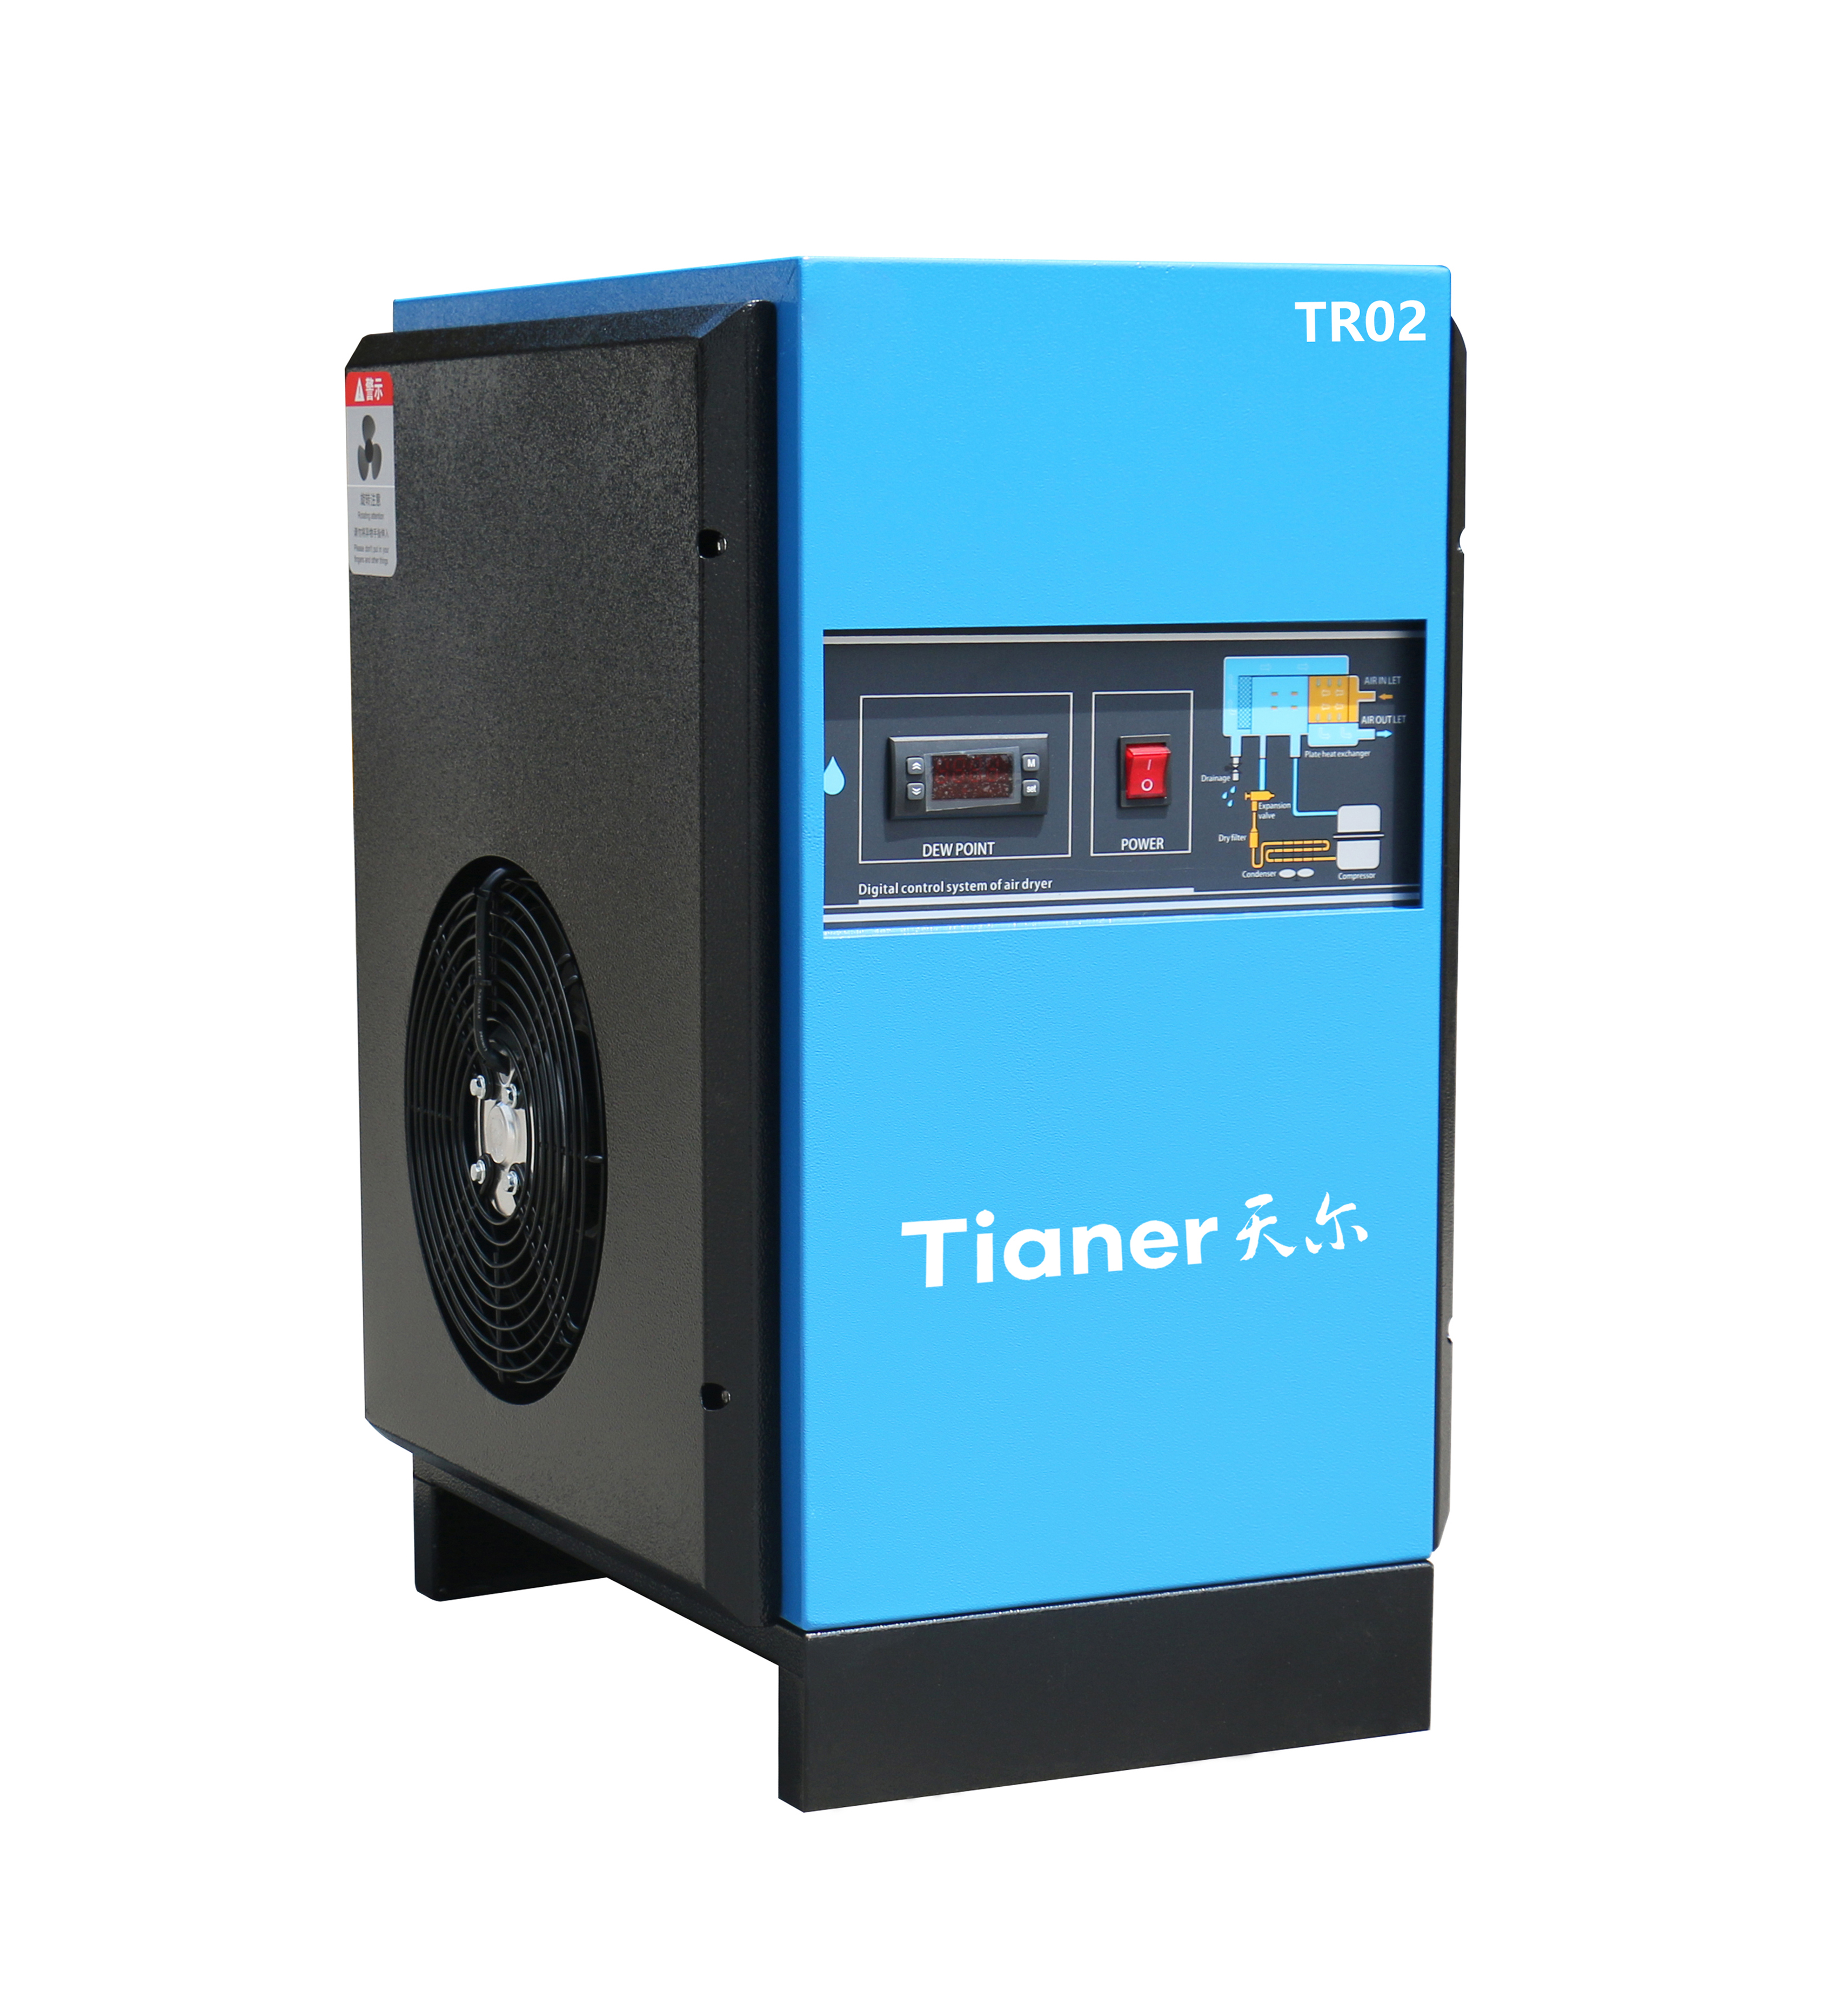 https://www.yctrairdryer.com/compressed-dryer-machine-tr-01-for-air-compressor-1-2-m3min-product/